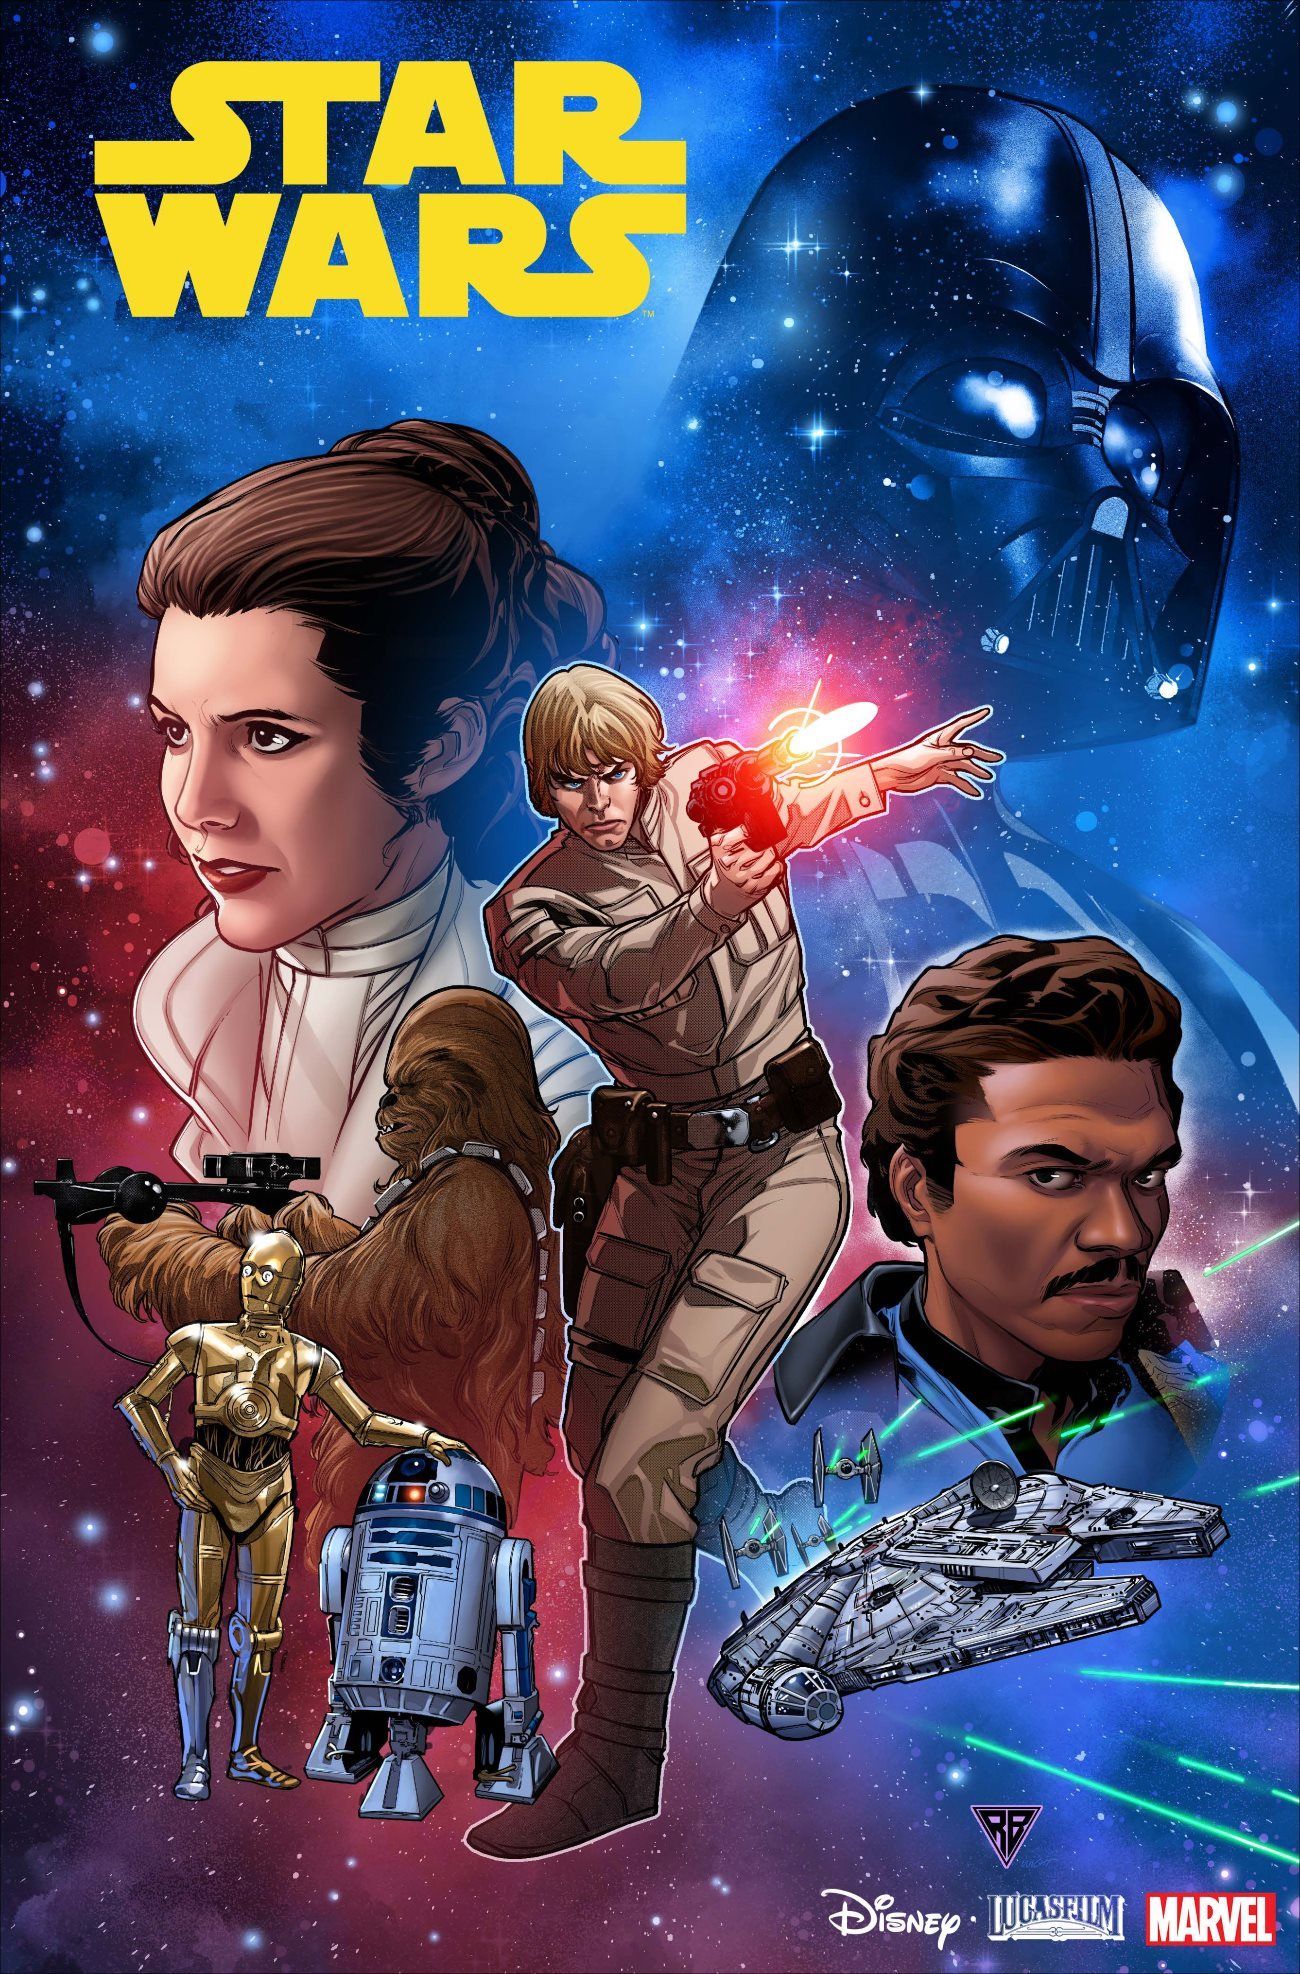 Star Wars New Marvel Comic Cover